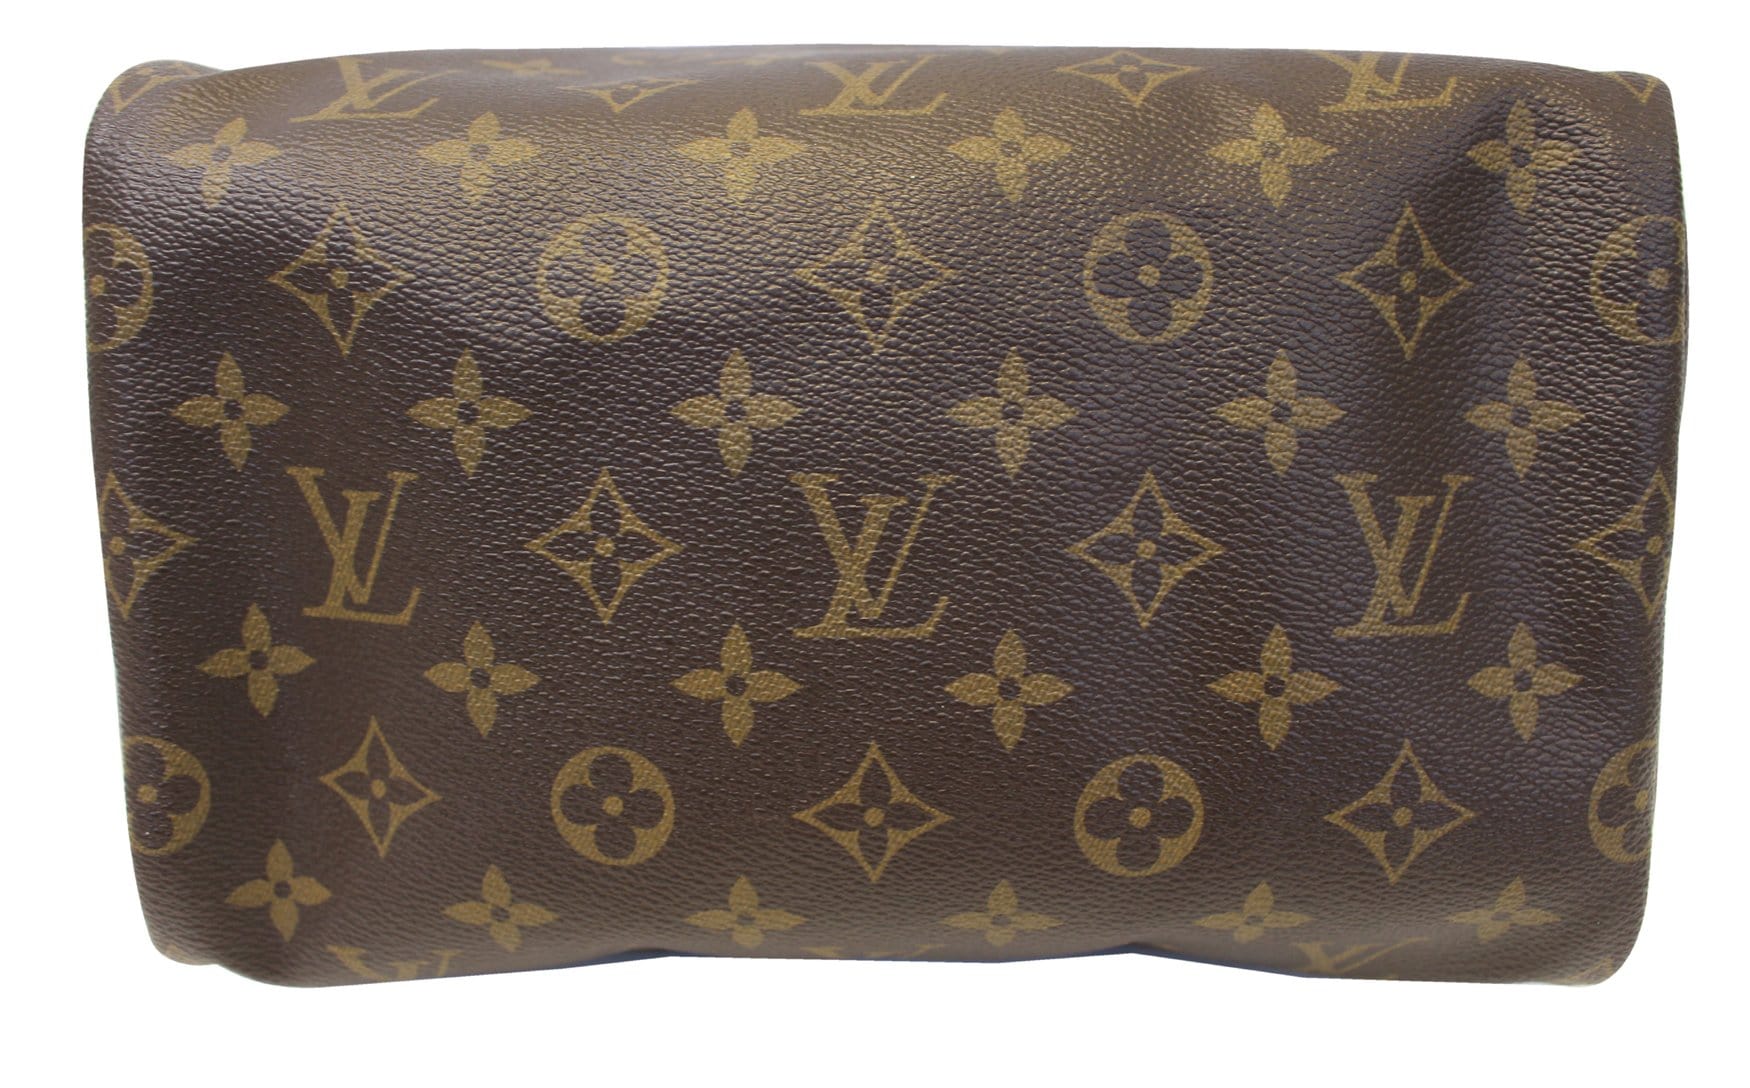 Louis Vuitton pre-owned Monogram Speedy Bandoulière 25 two-way Bag